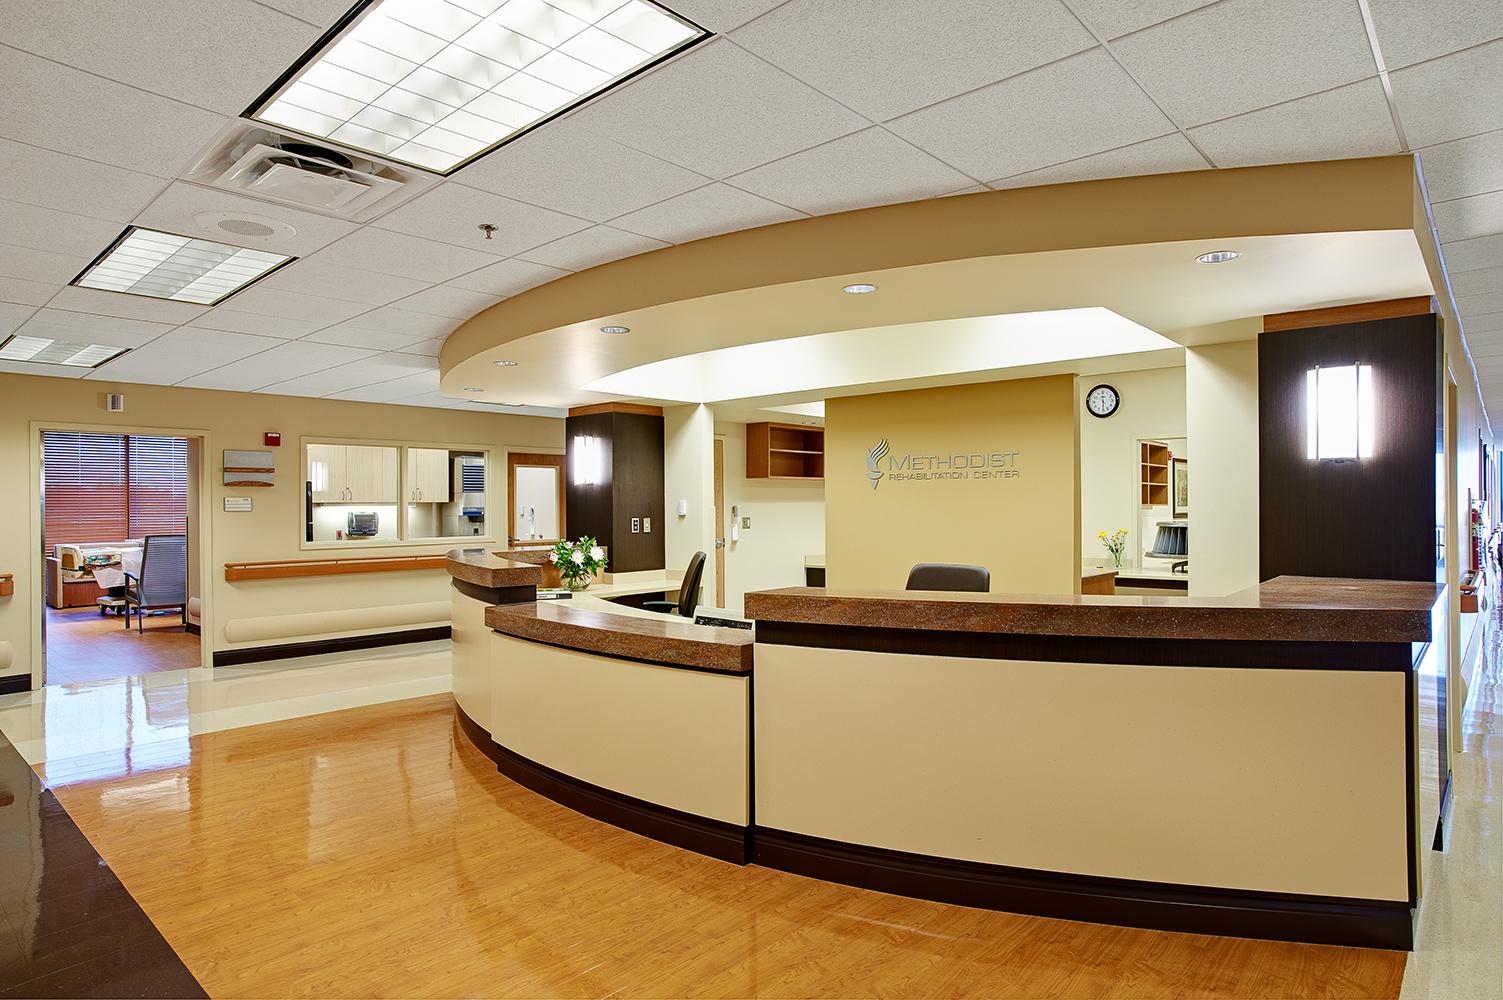 Select sconces provide stylish hospital lighting in a modern nurse's station.